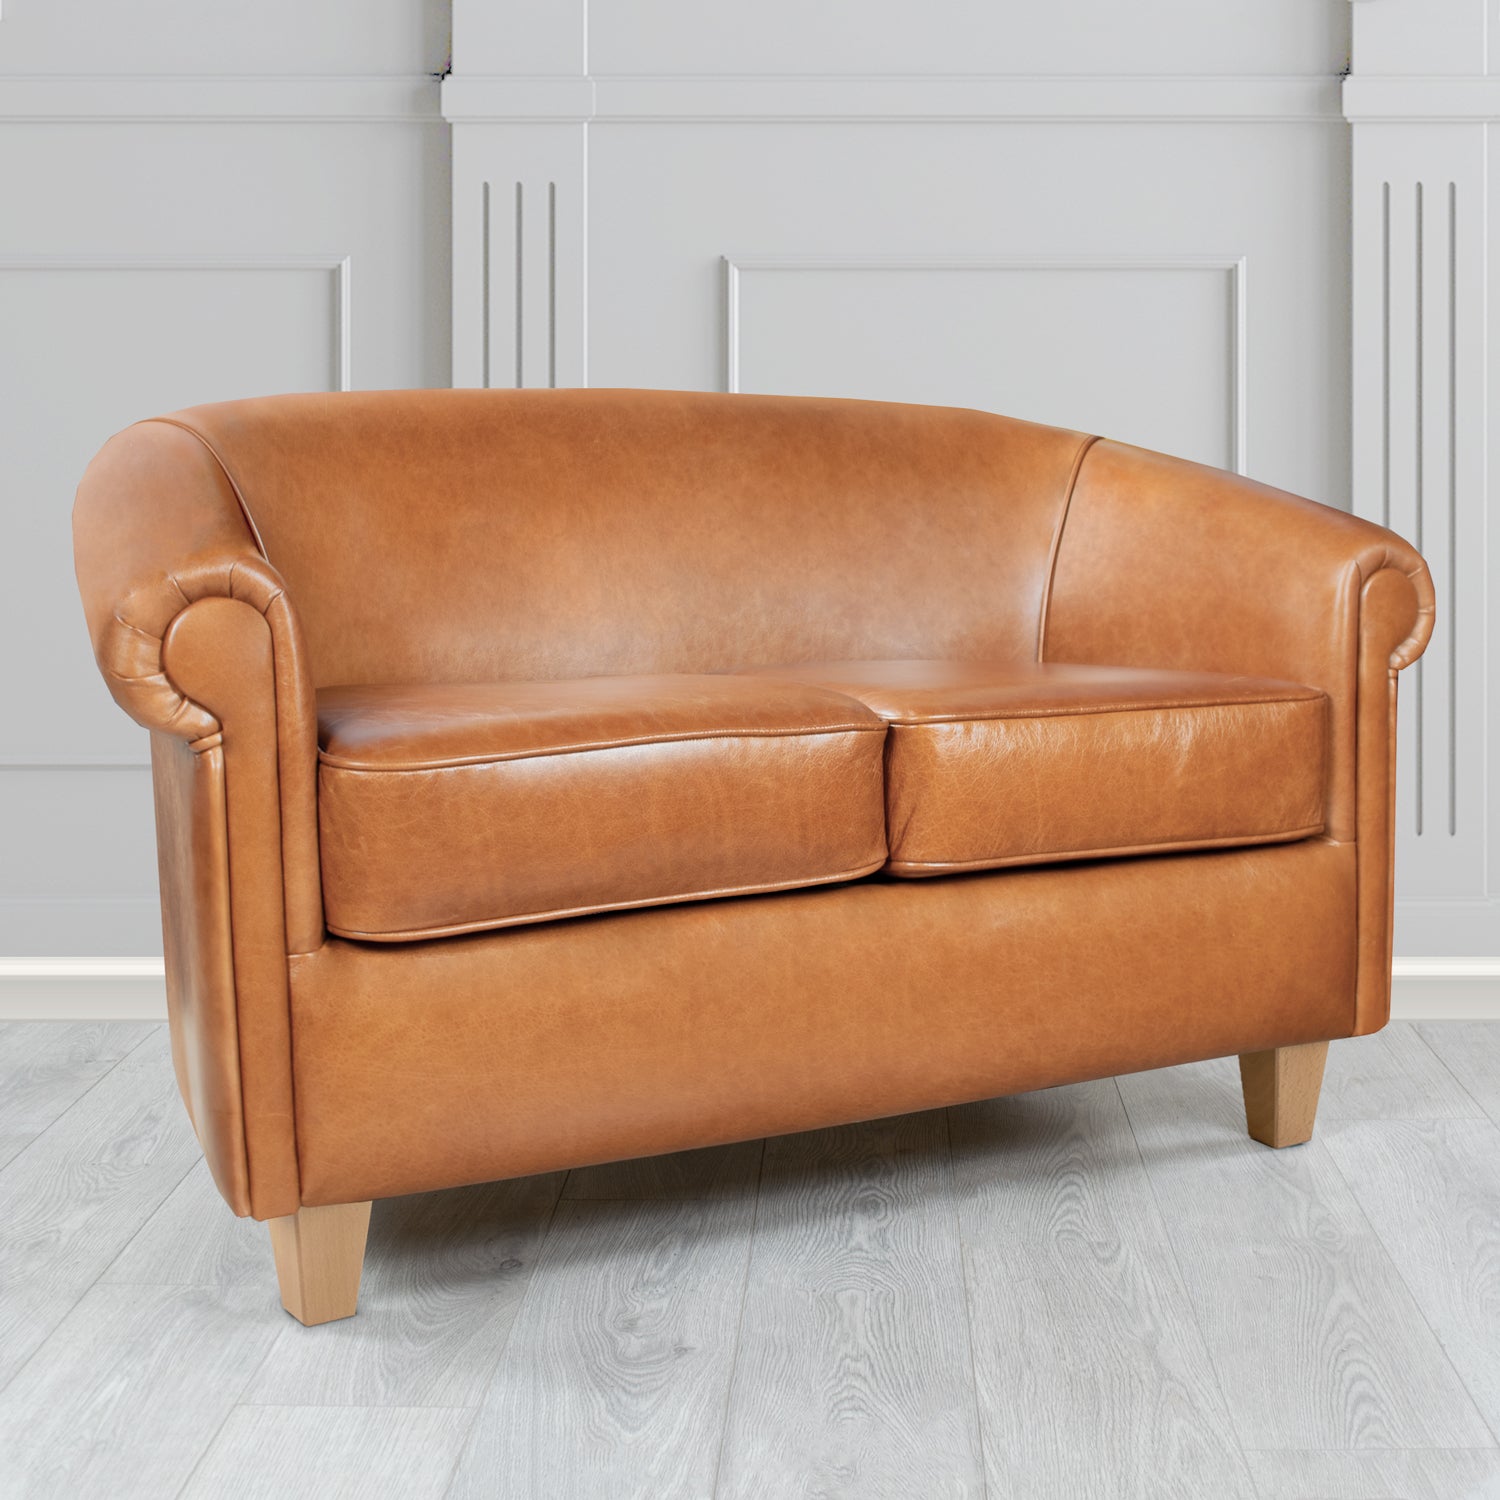 Siena 2 Seater Tub Sofa in Crib 5 Old English Tan Genuine Leather - The Tub Chair Shop